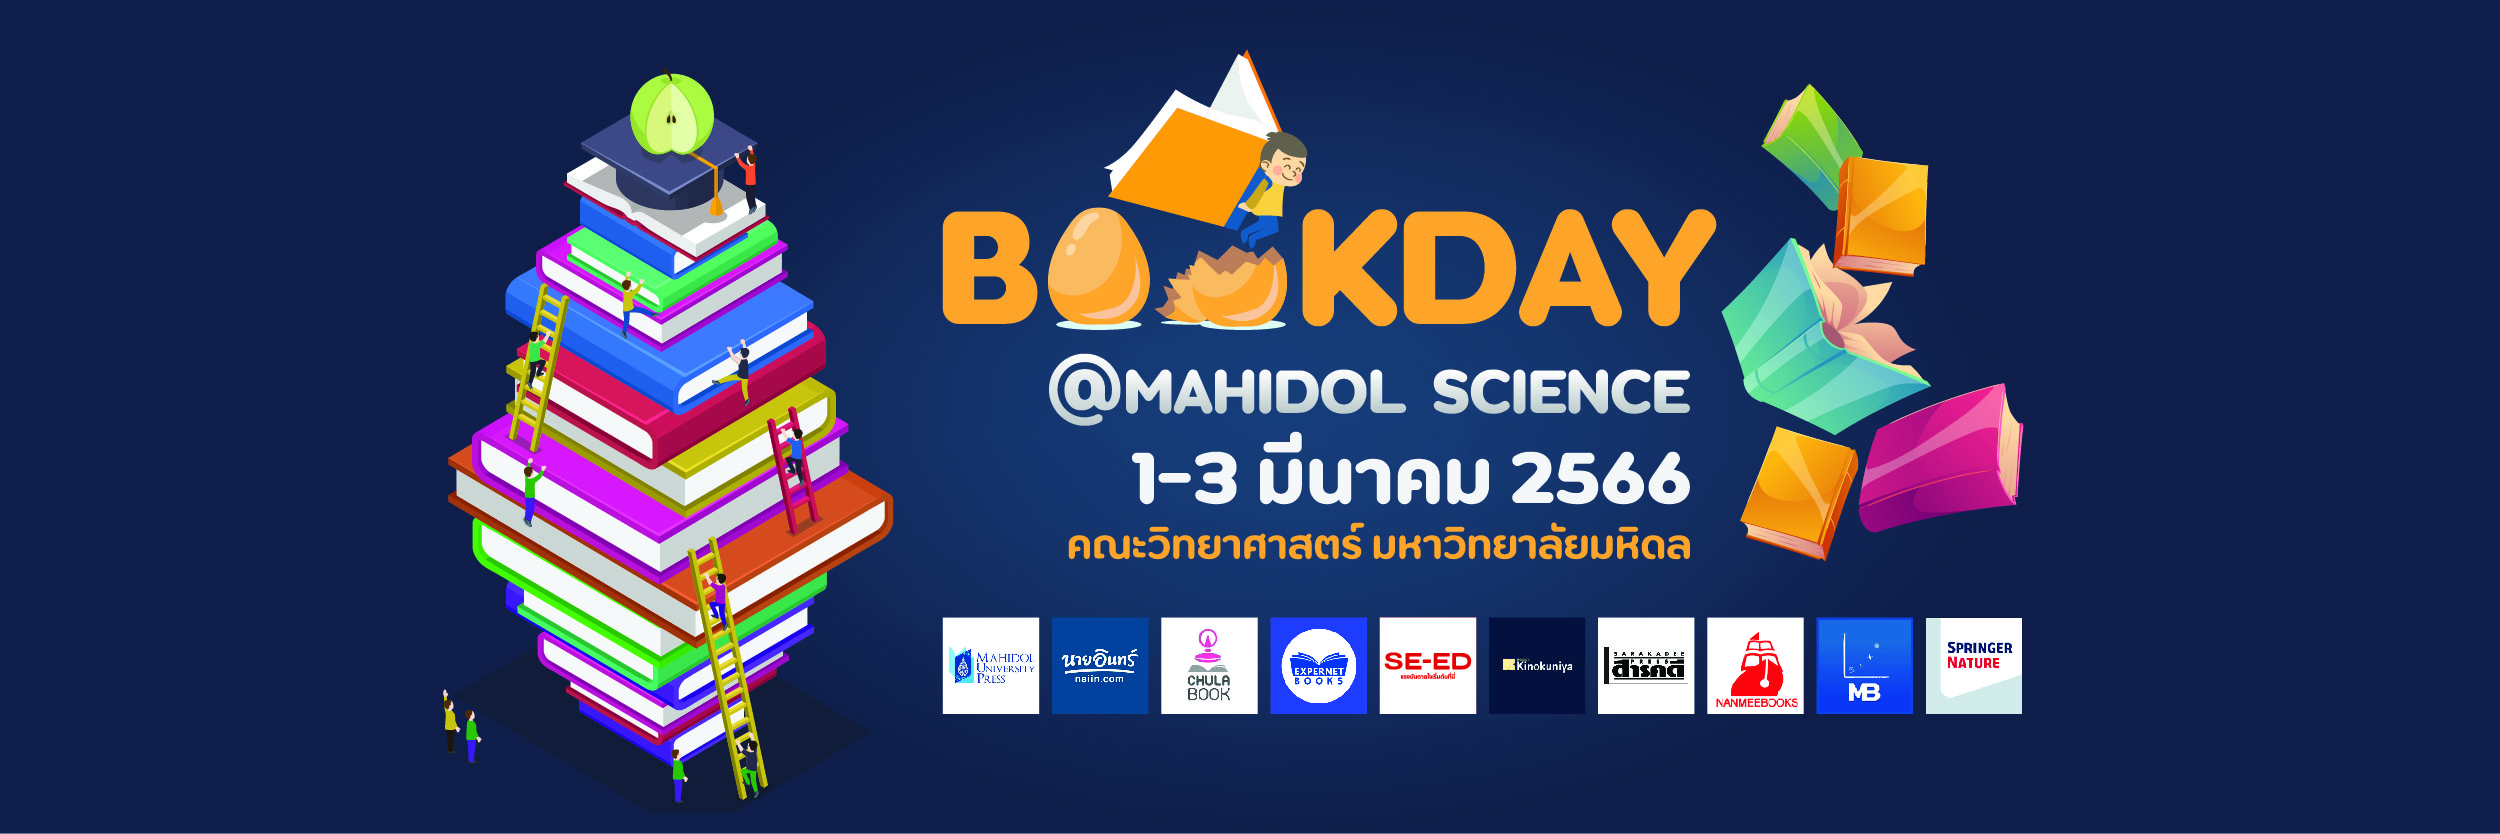 BookDay@Mahidol Science